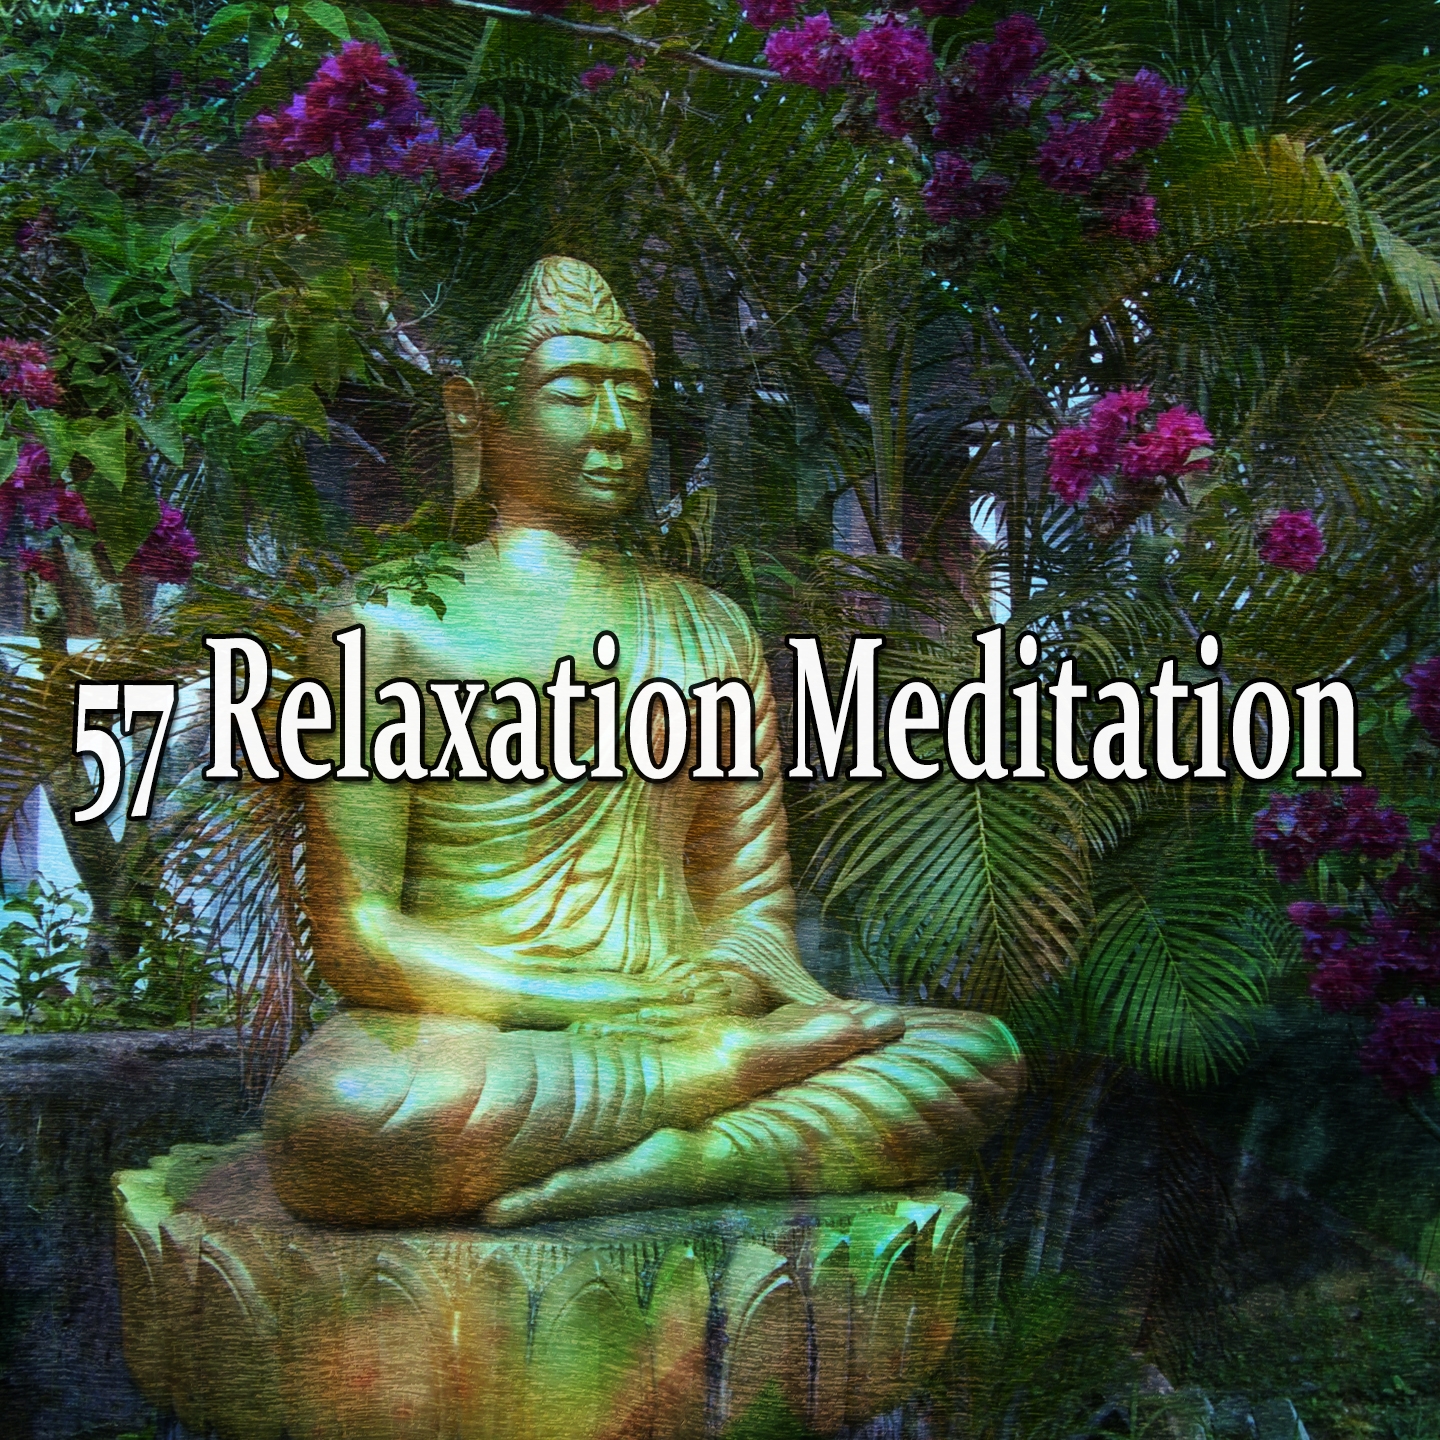 57 Relaxation Meditation